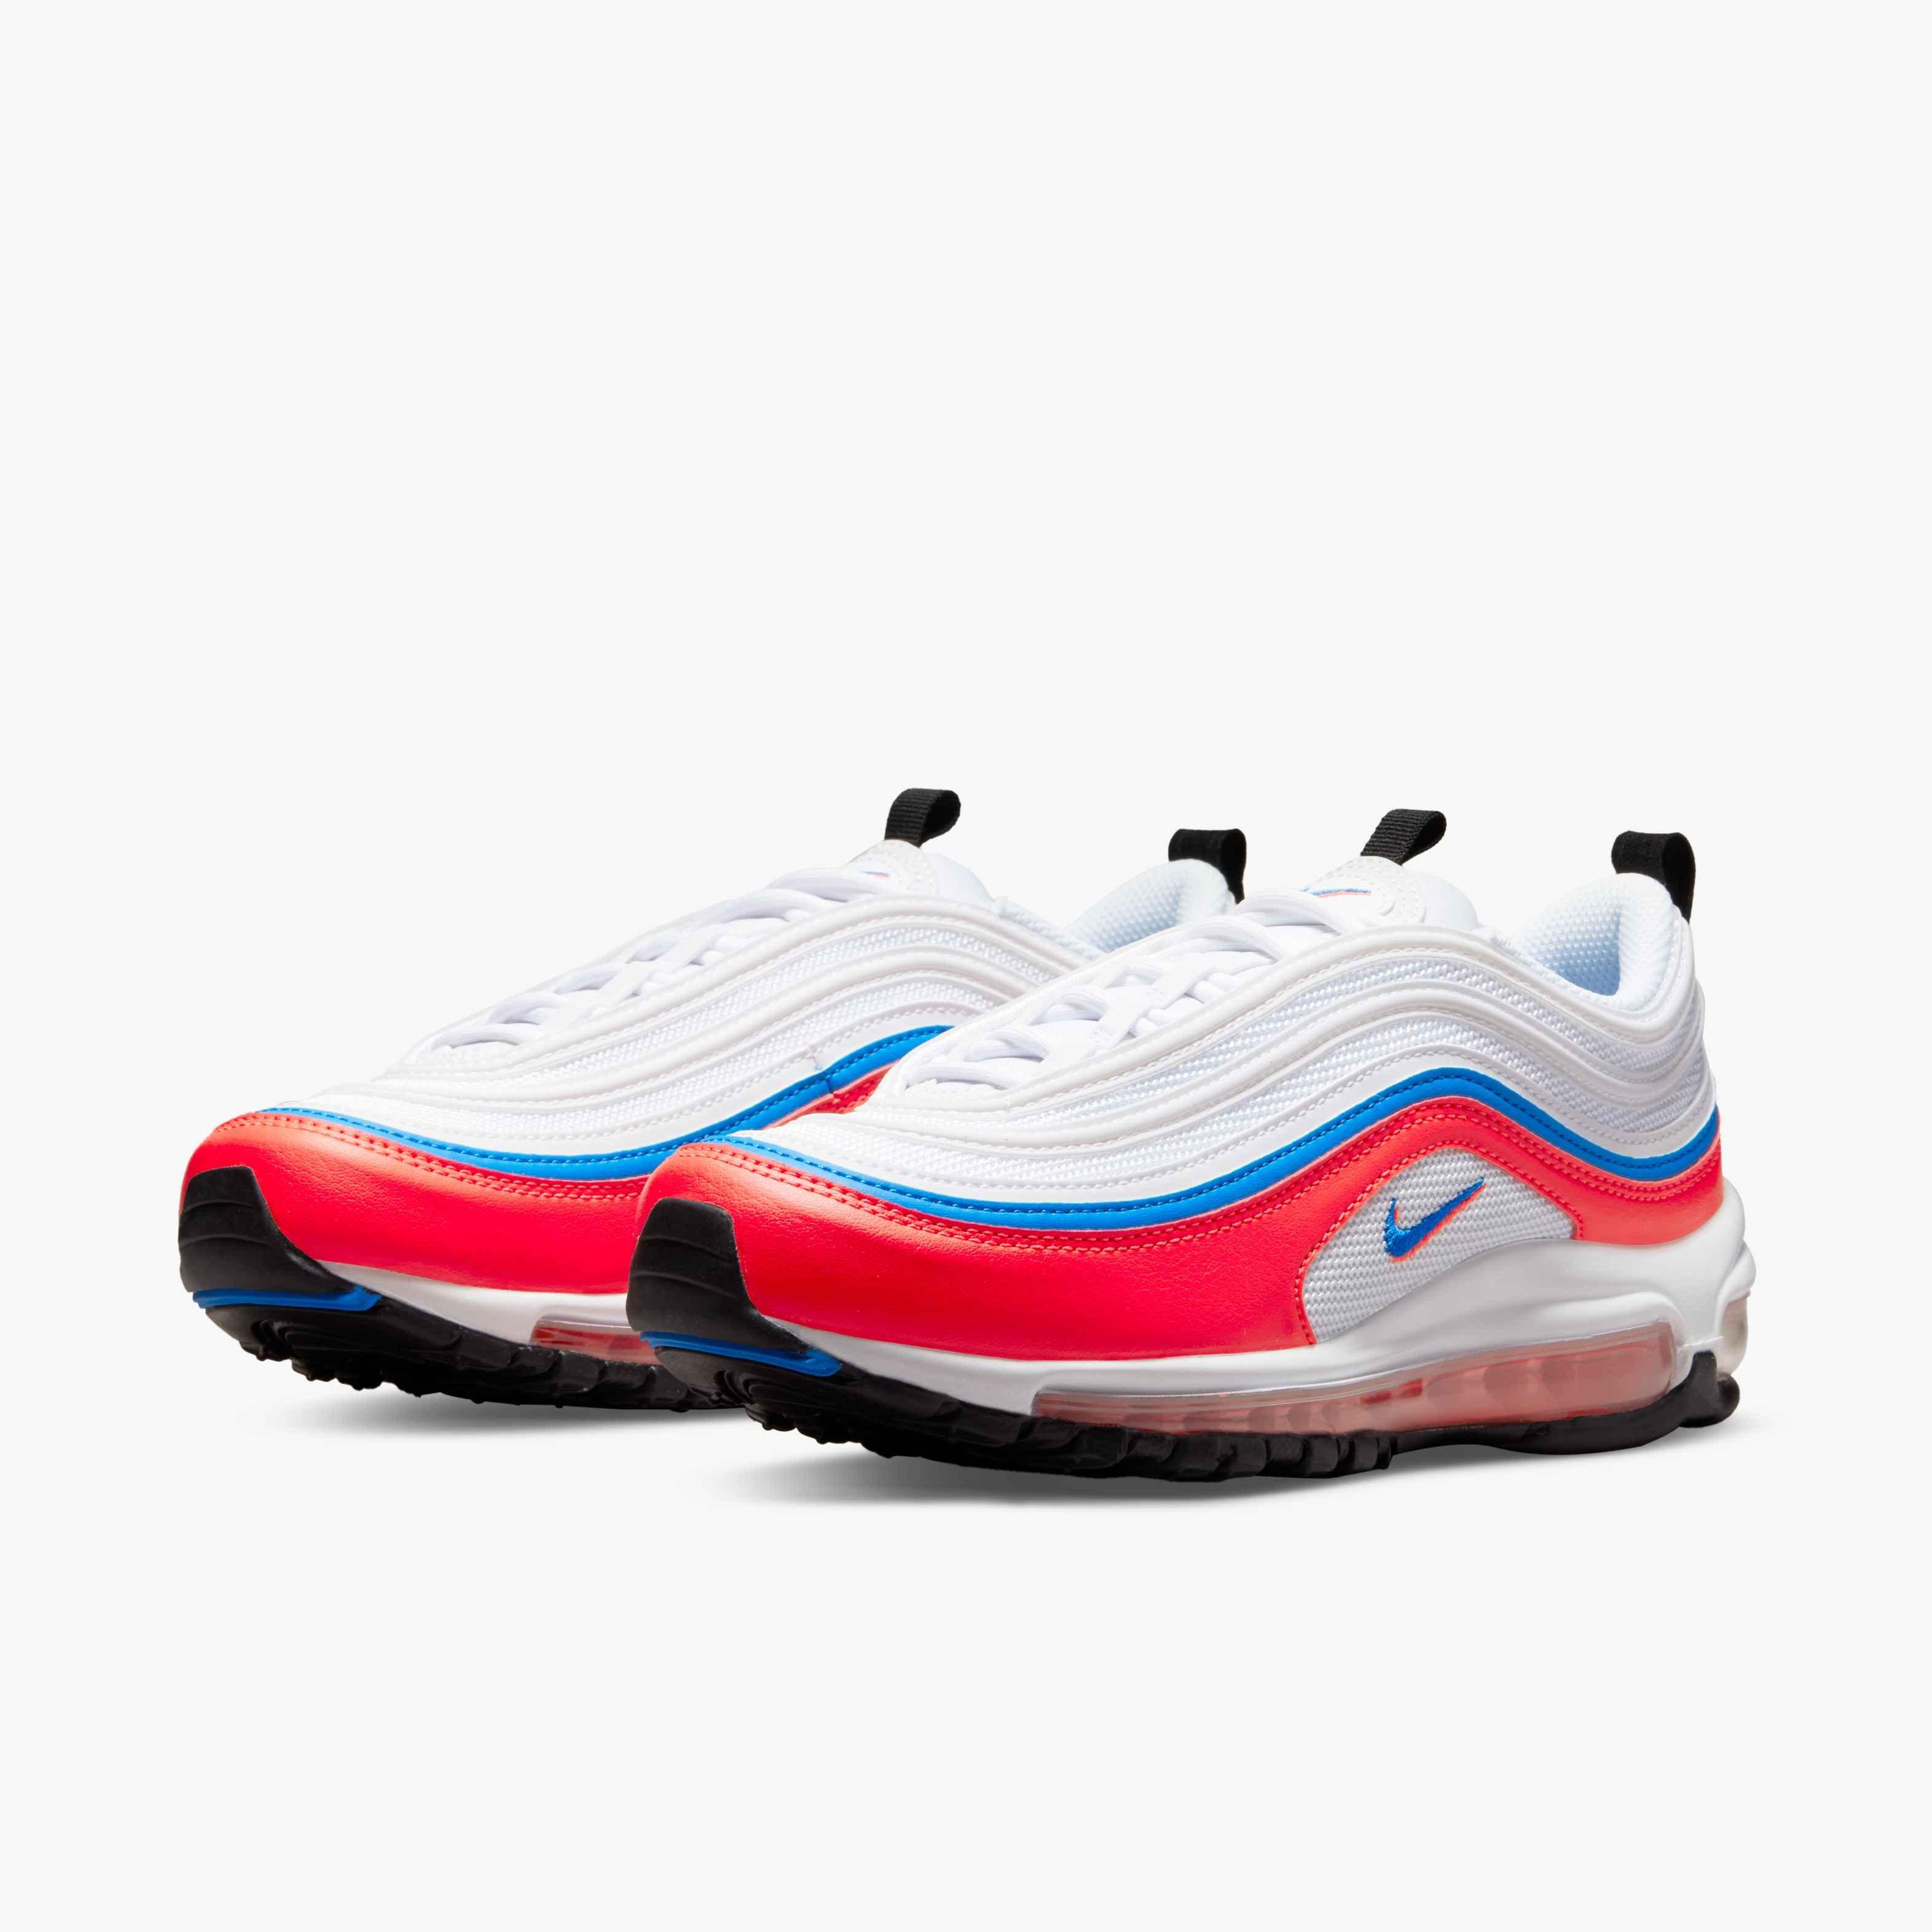 Nike Max 97 "White/Photo Blue/Bright Crimson/Black" Women's Shoe - | Gear